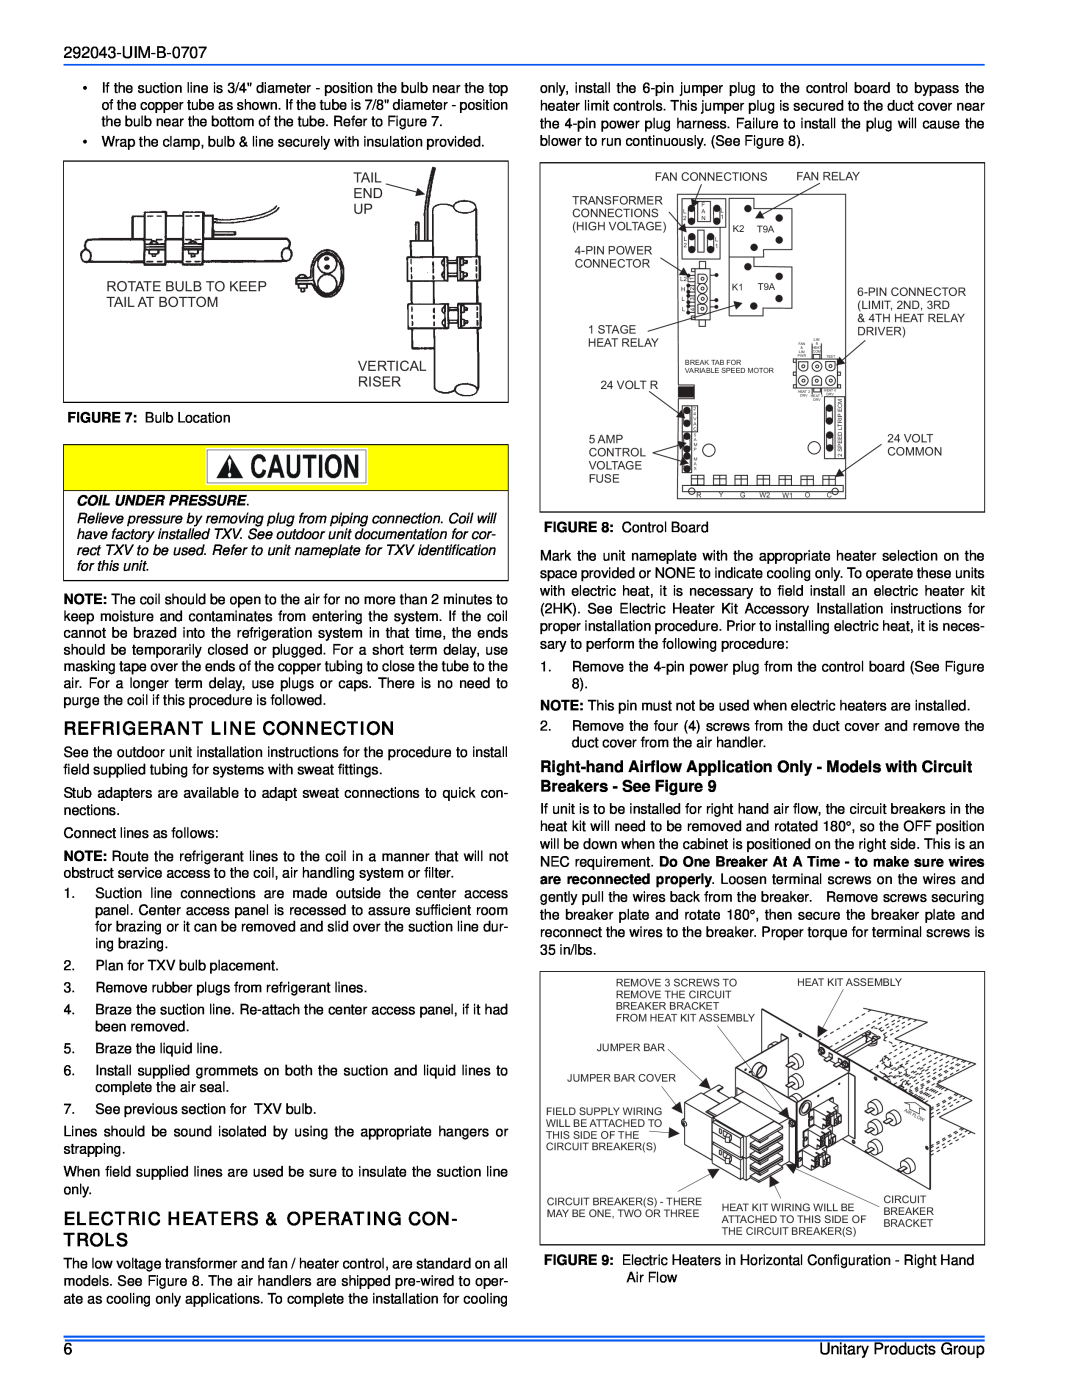 Coleman F*FP installation manual Refrigerant Line Connection, UIM-B-0707, Coil Under Pressure 